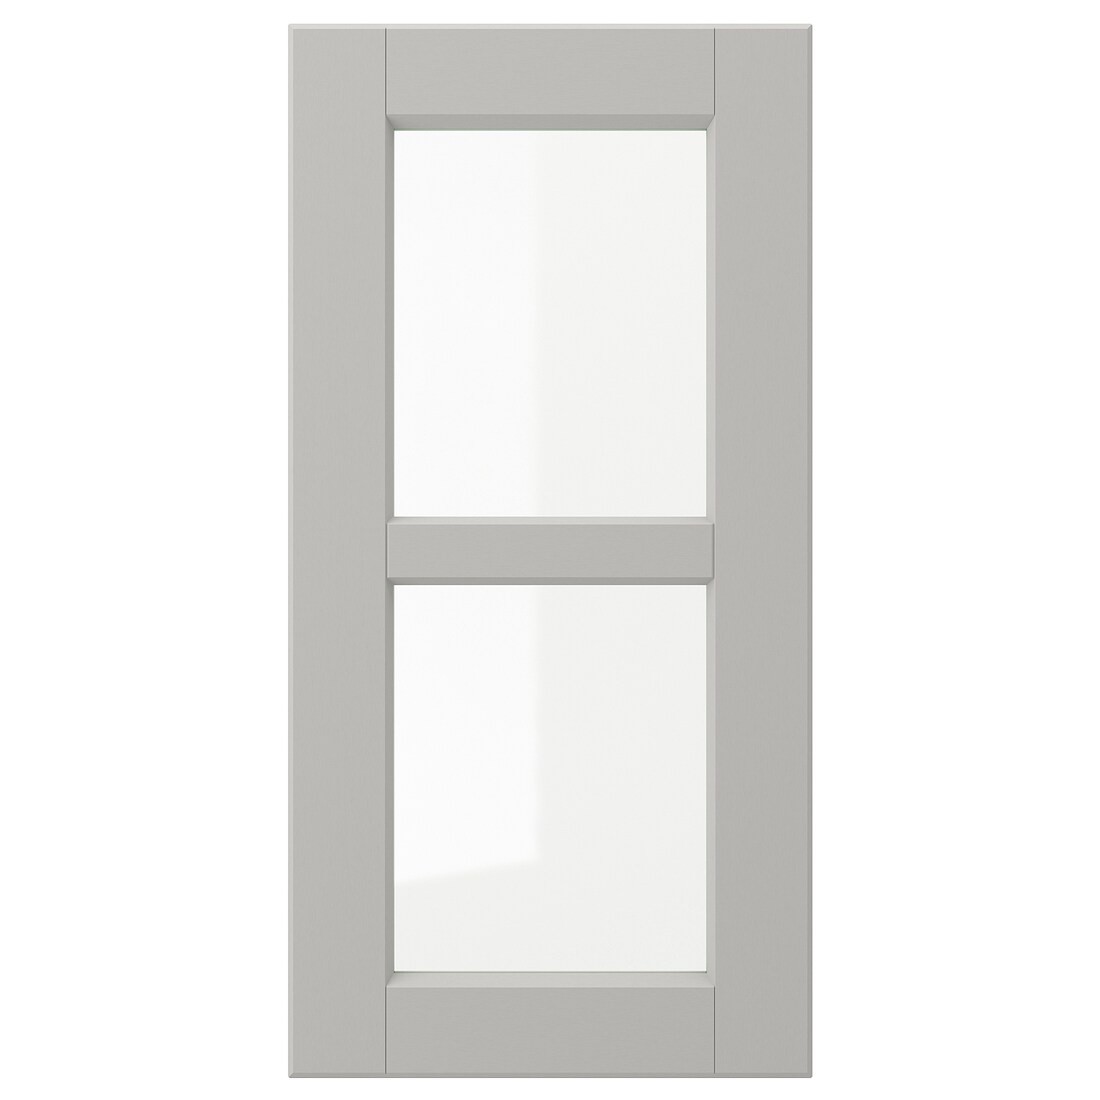 IKEA LERHYTTAN ЛЕРХЮТТАН Стеклянная дверь, светло-серый, 30x60 см 20461509 | 204.615.09